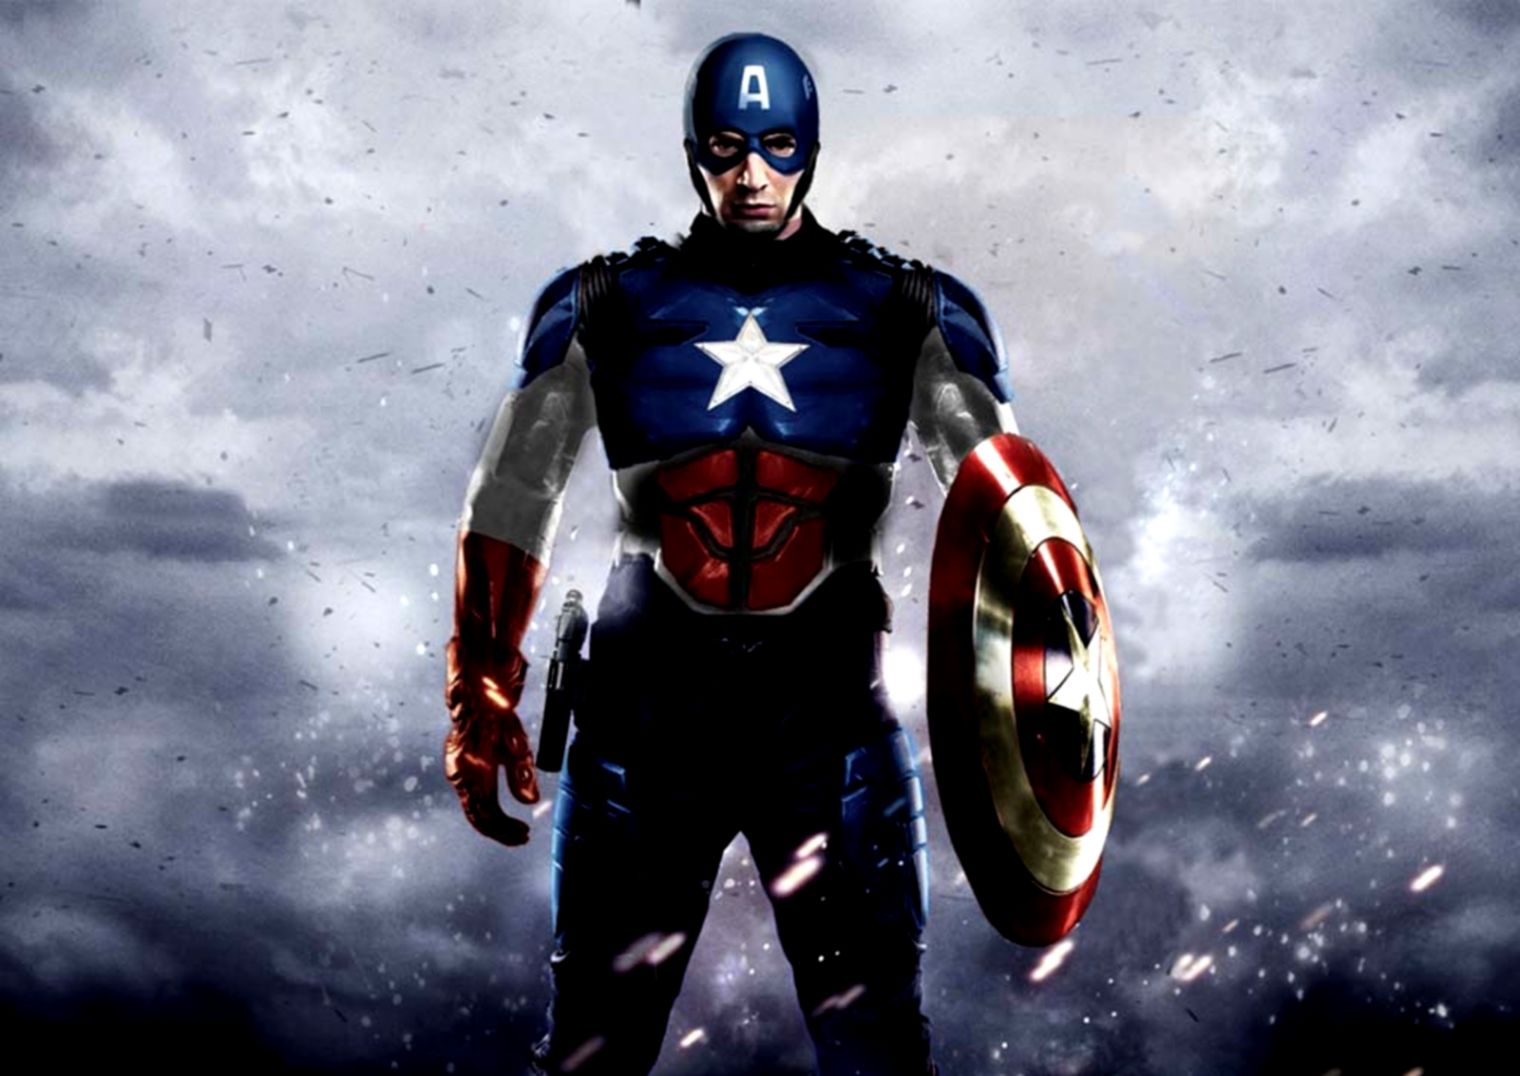 capitan america wallpaper,superhero,fictional character,captain america,hero,suit actor